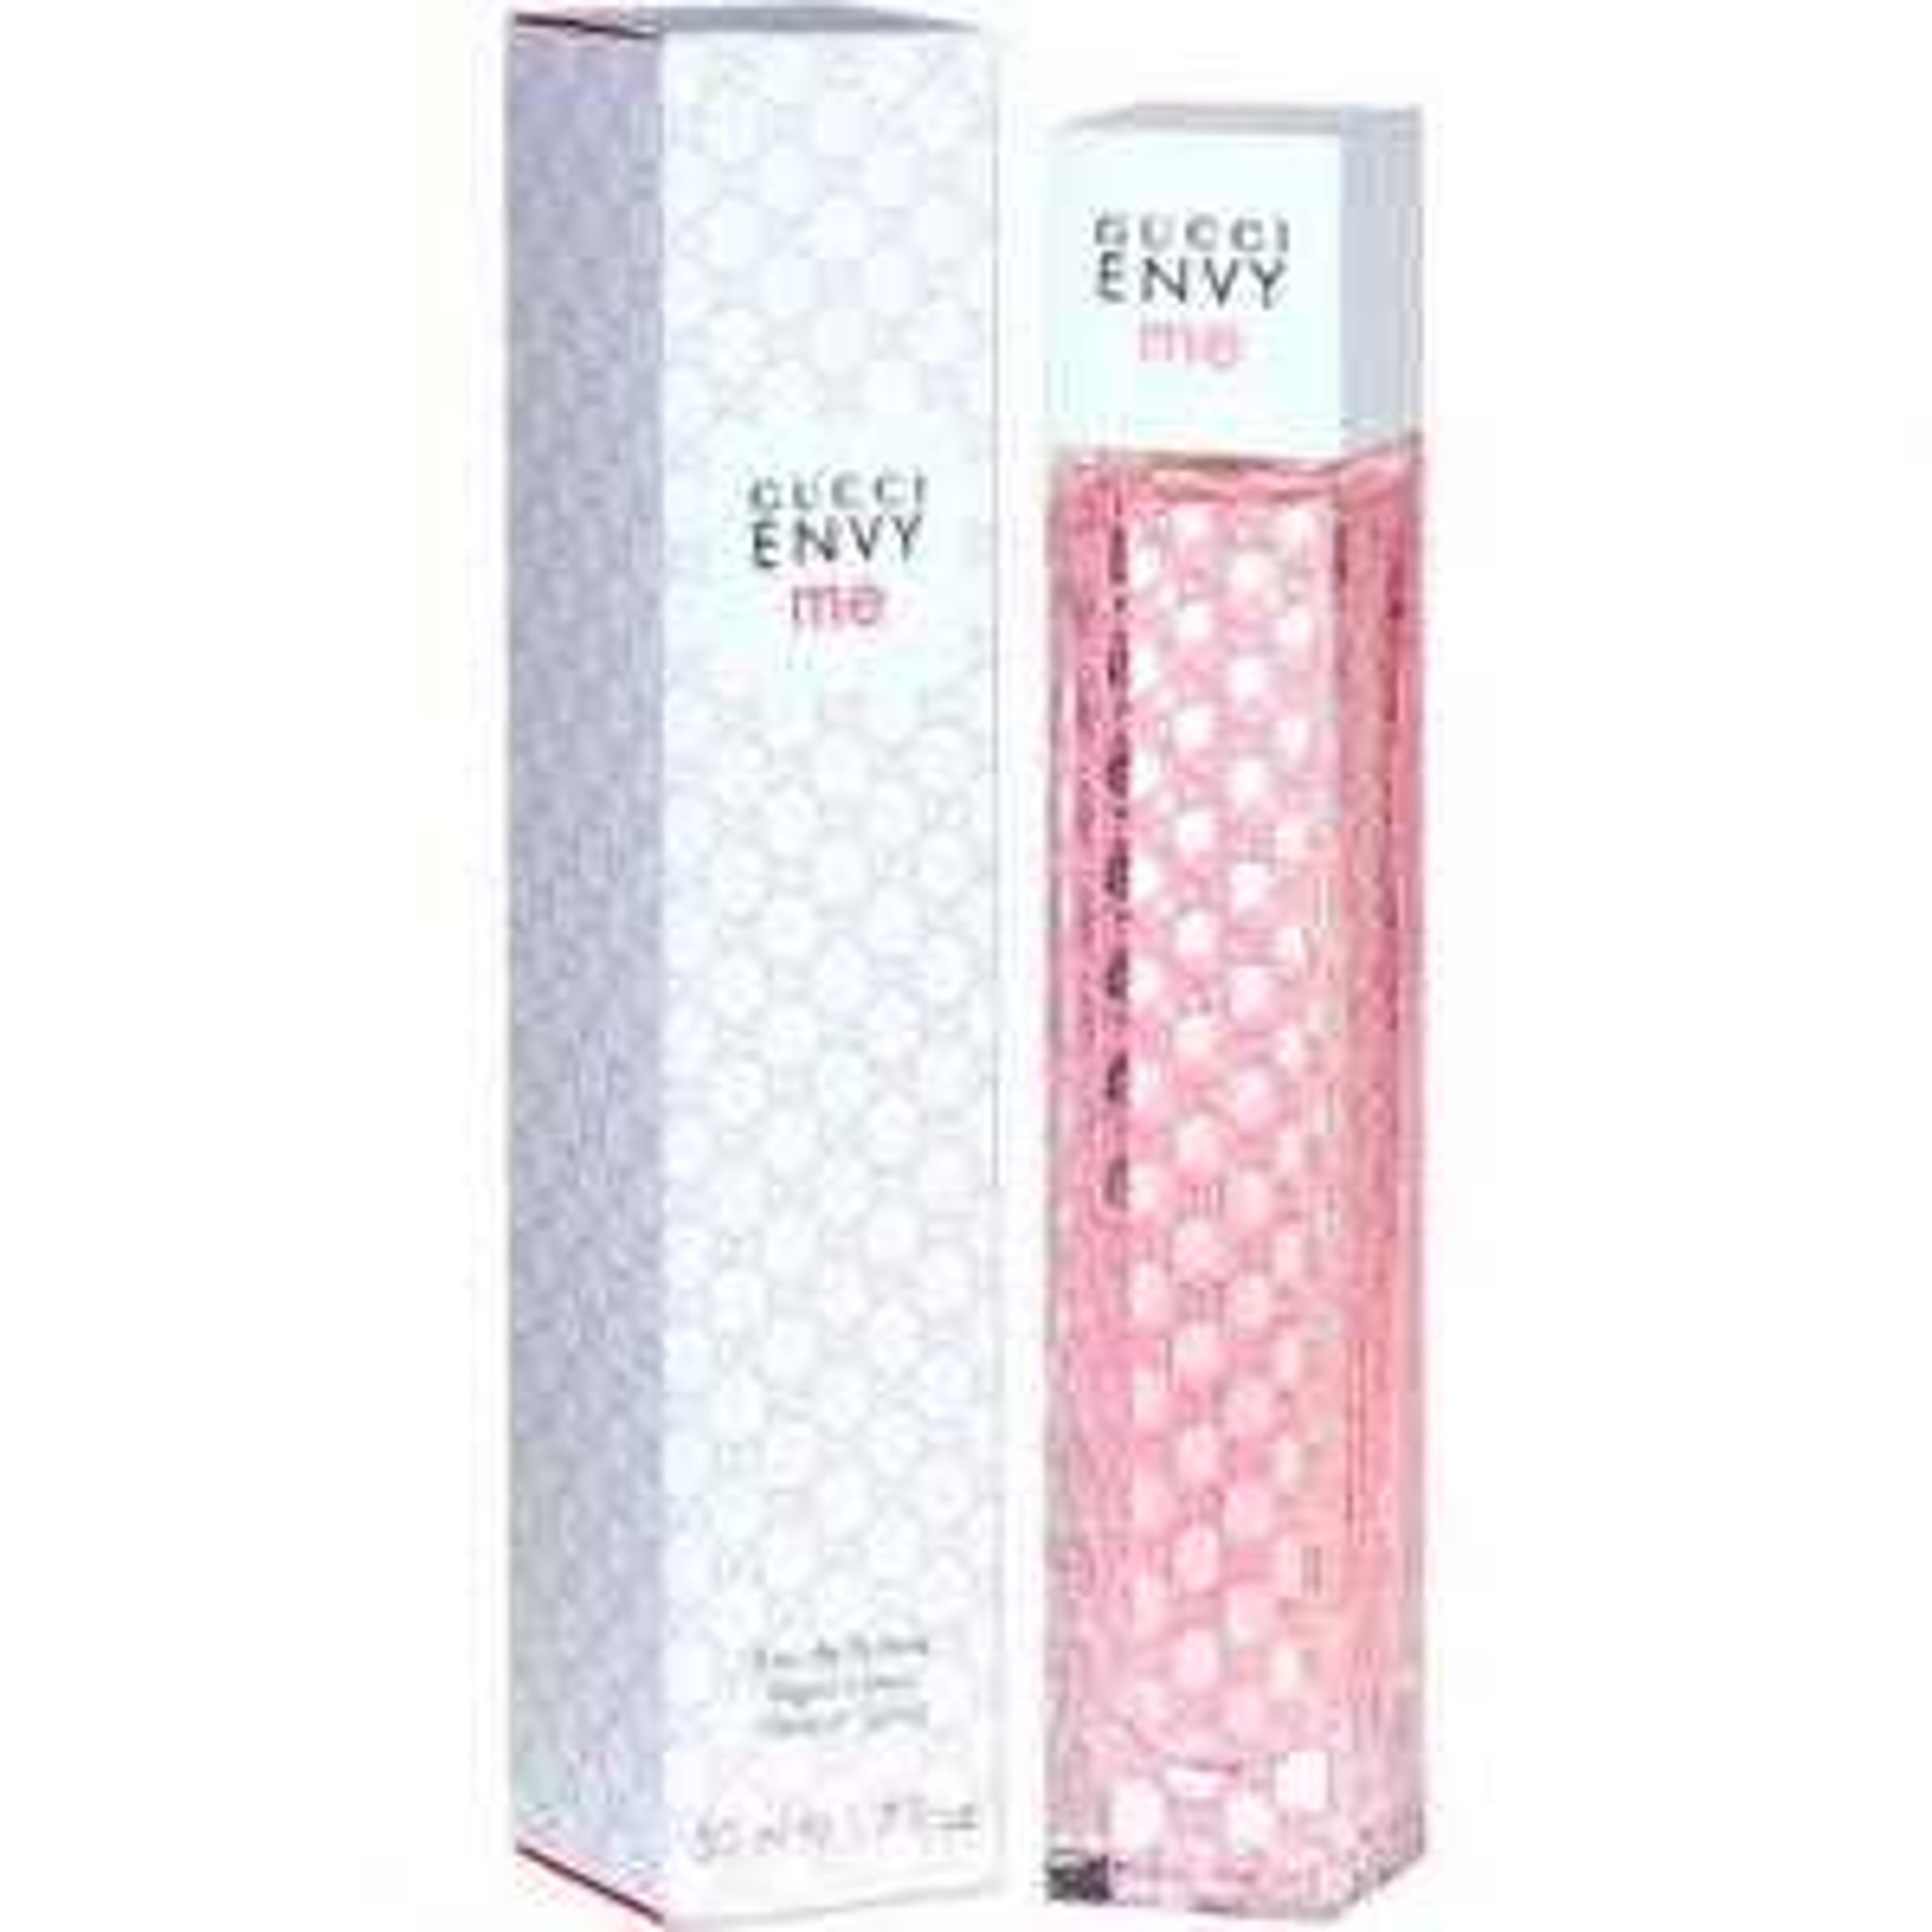 Envy Me Perfume by Gucci for Women 3.4 oz Spray - HottPerfume.com